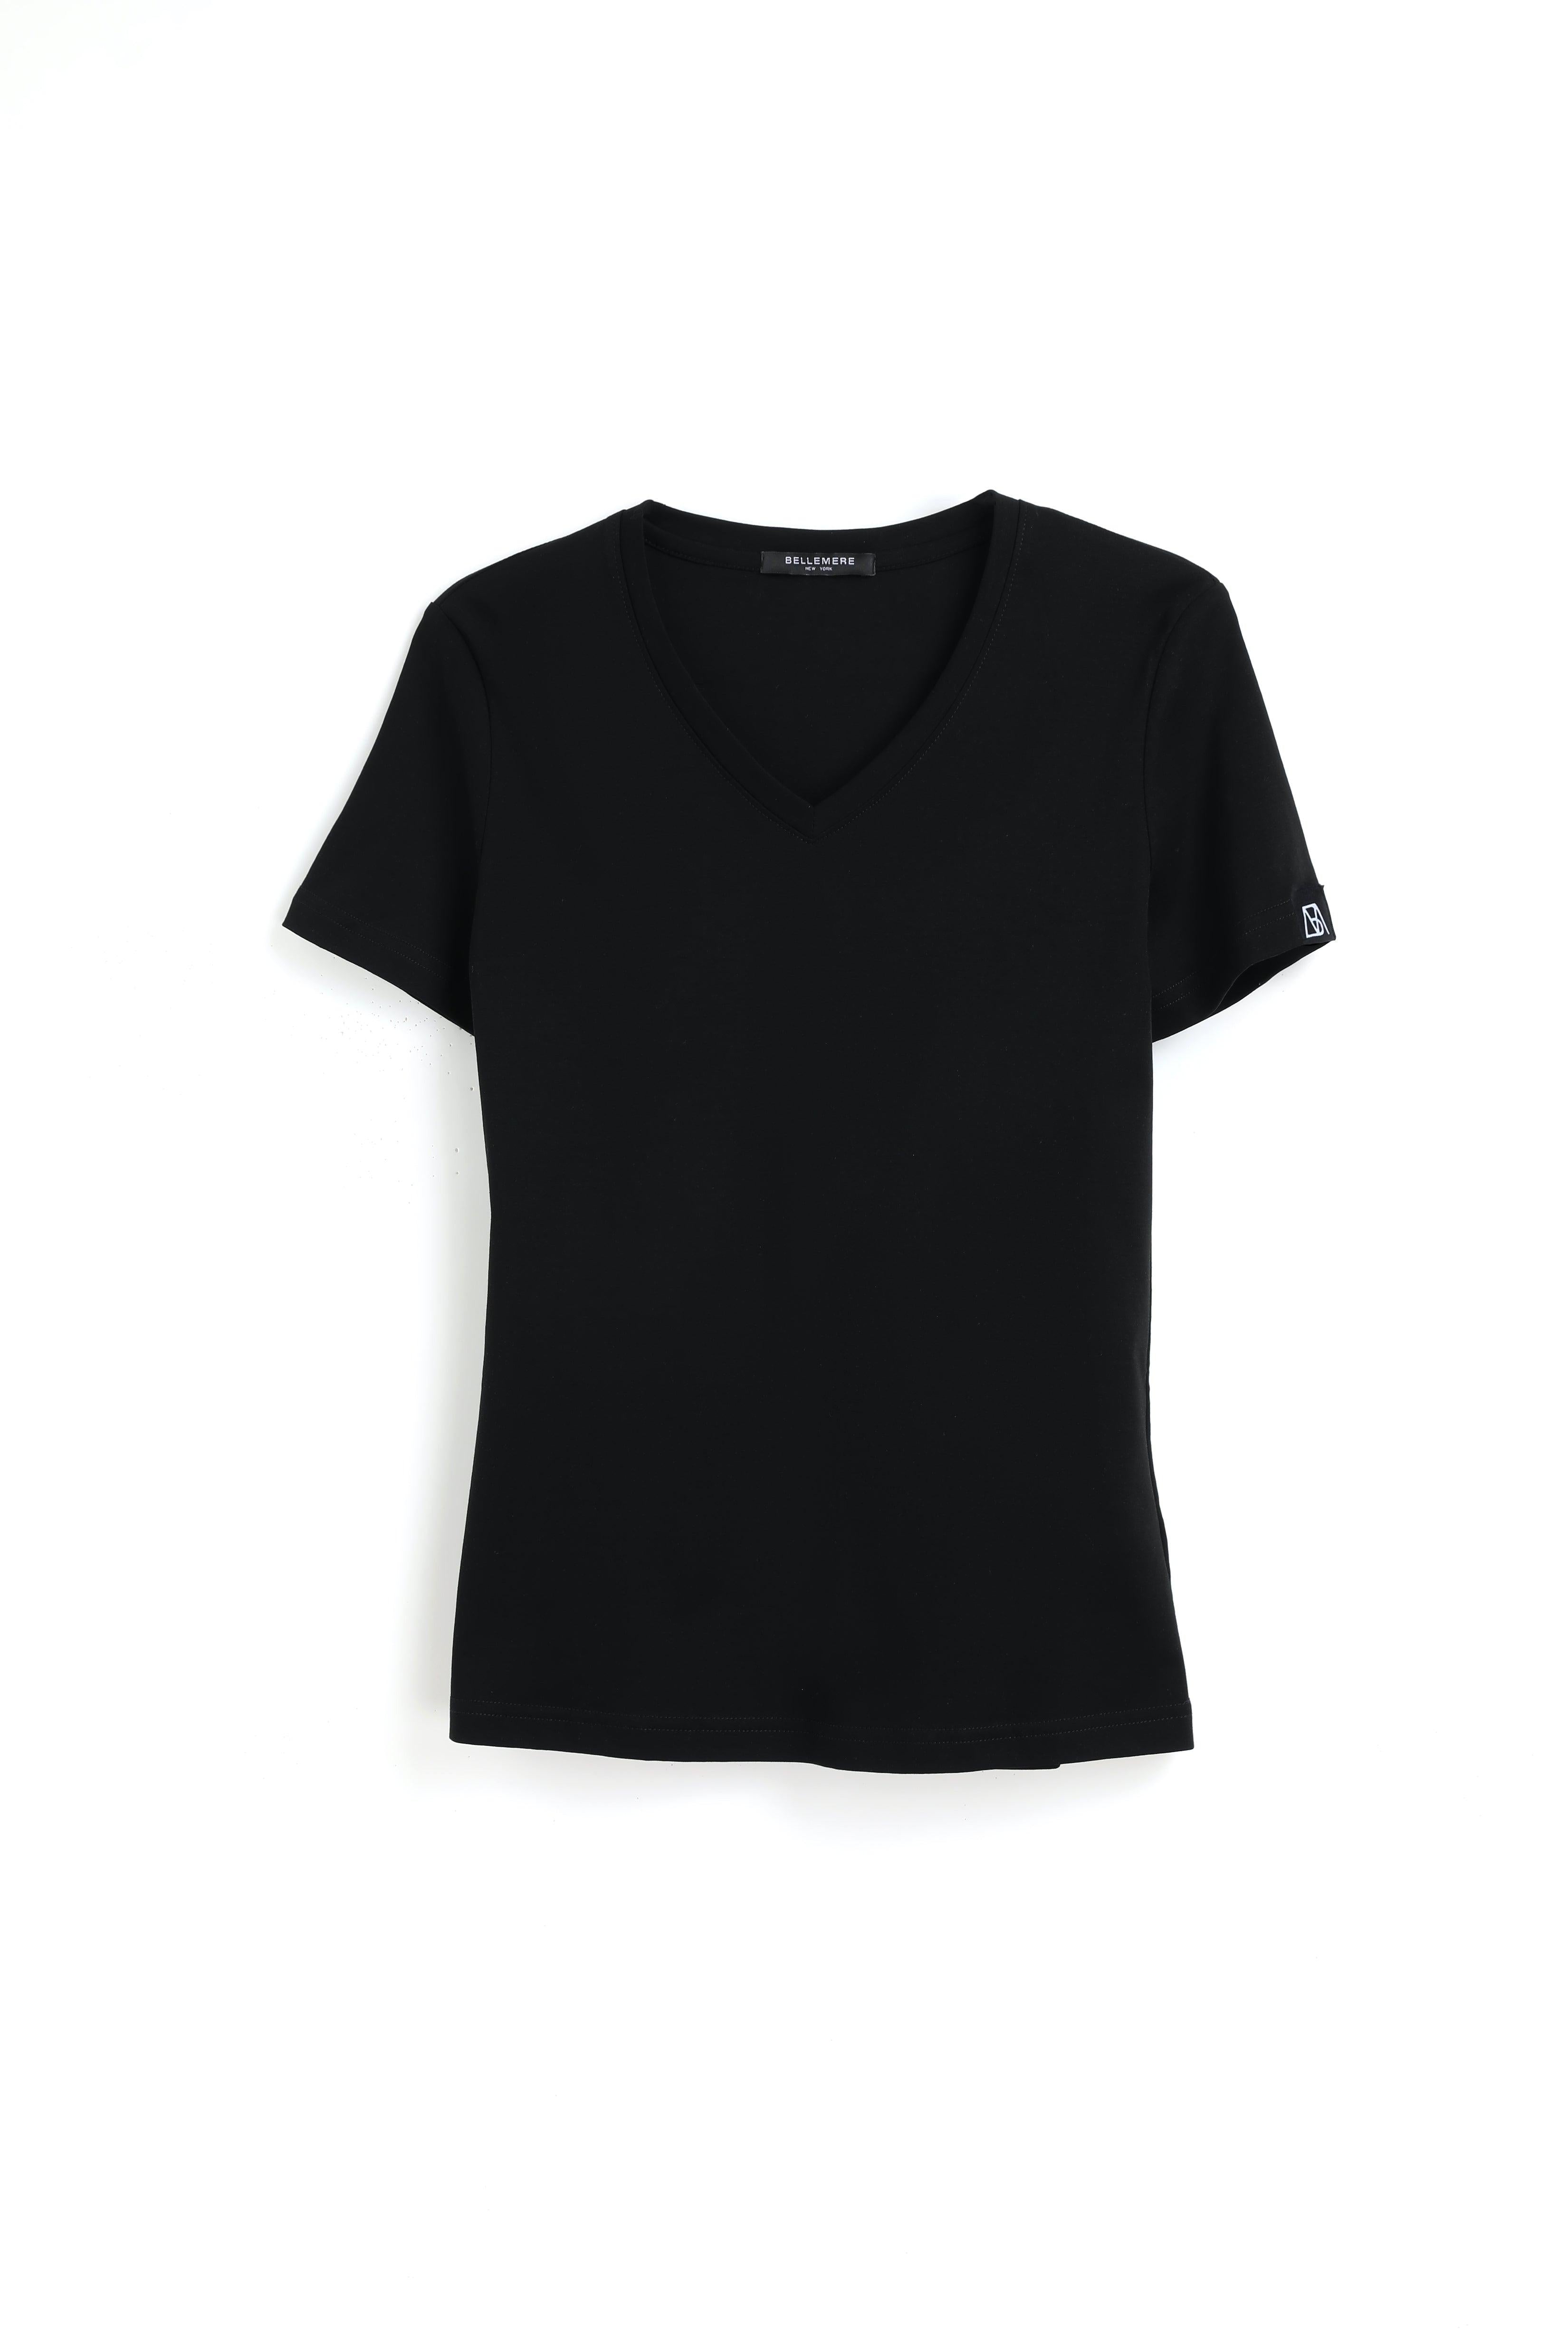 160 classic women v neck mercerized cotton t shirt